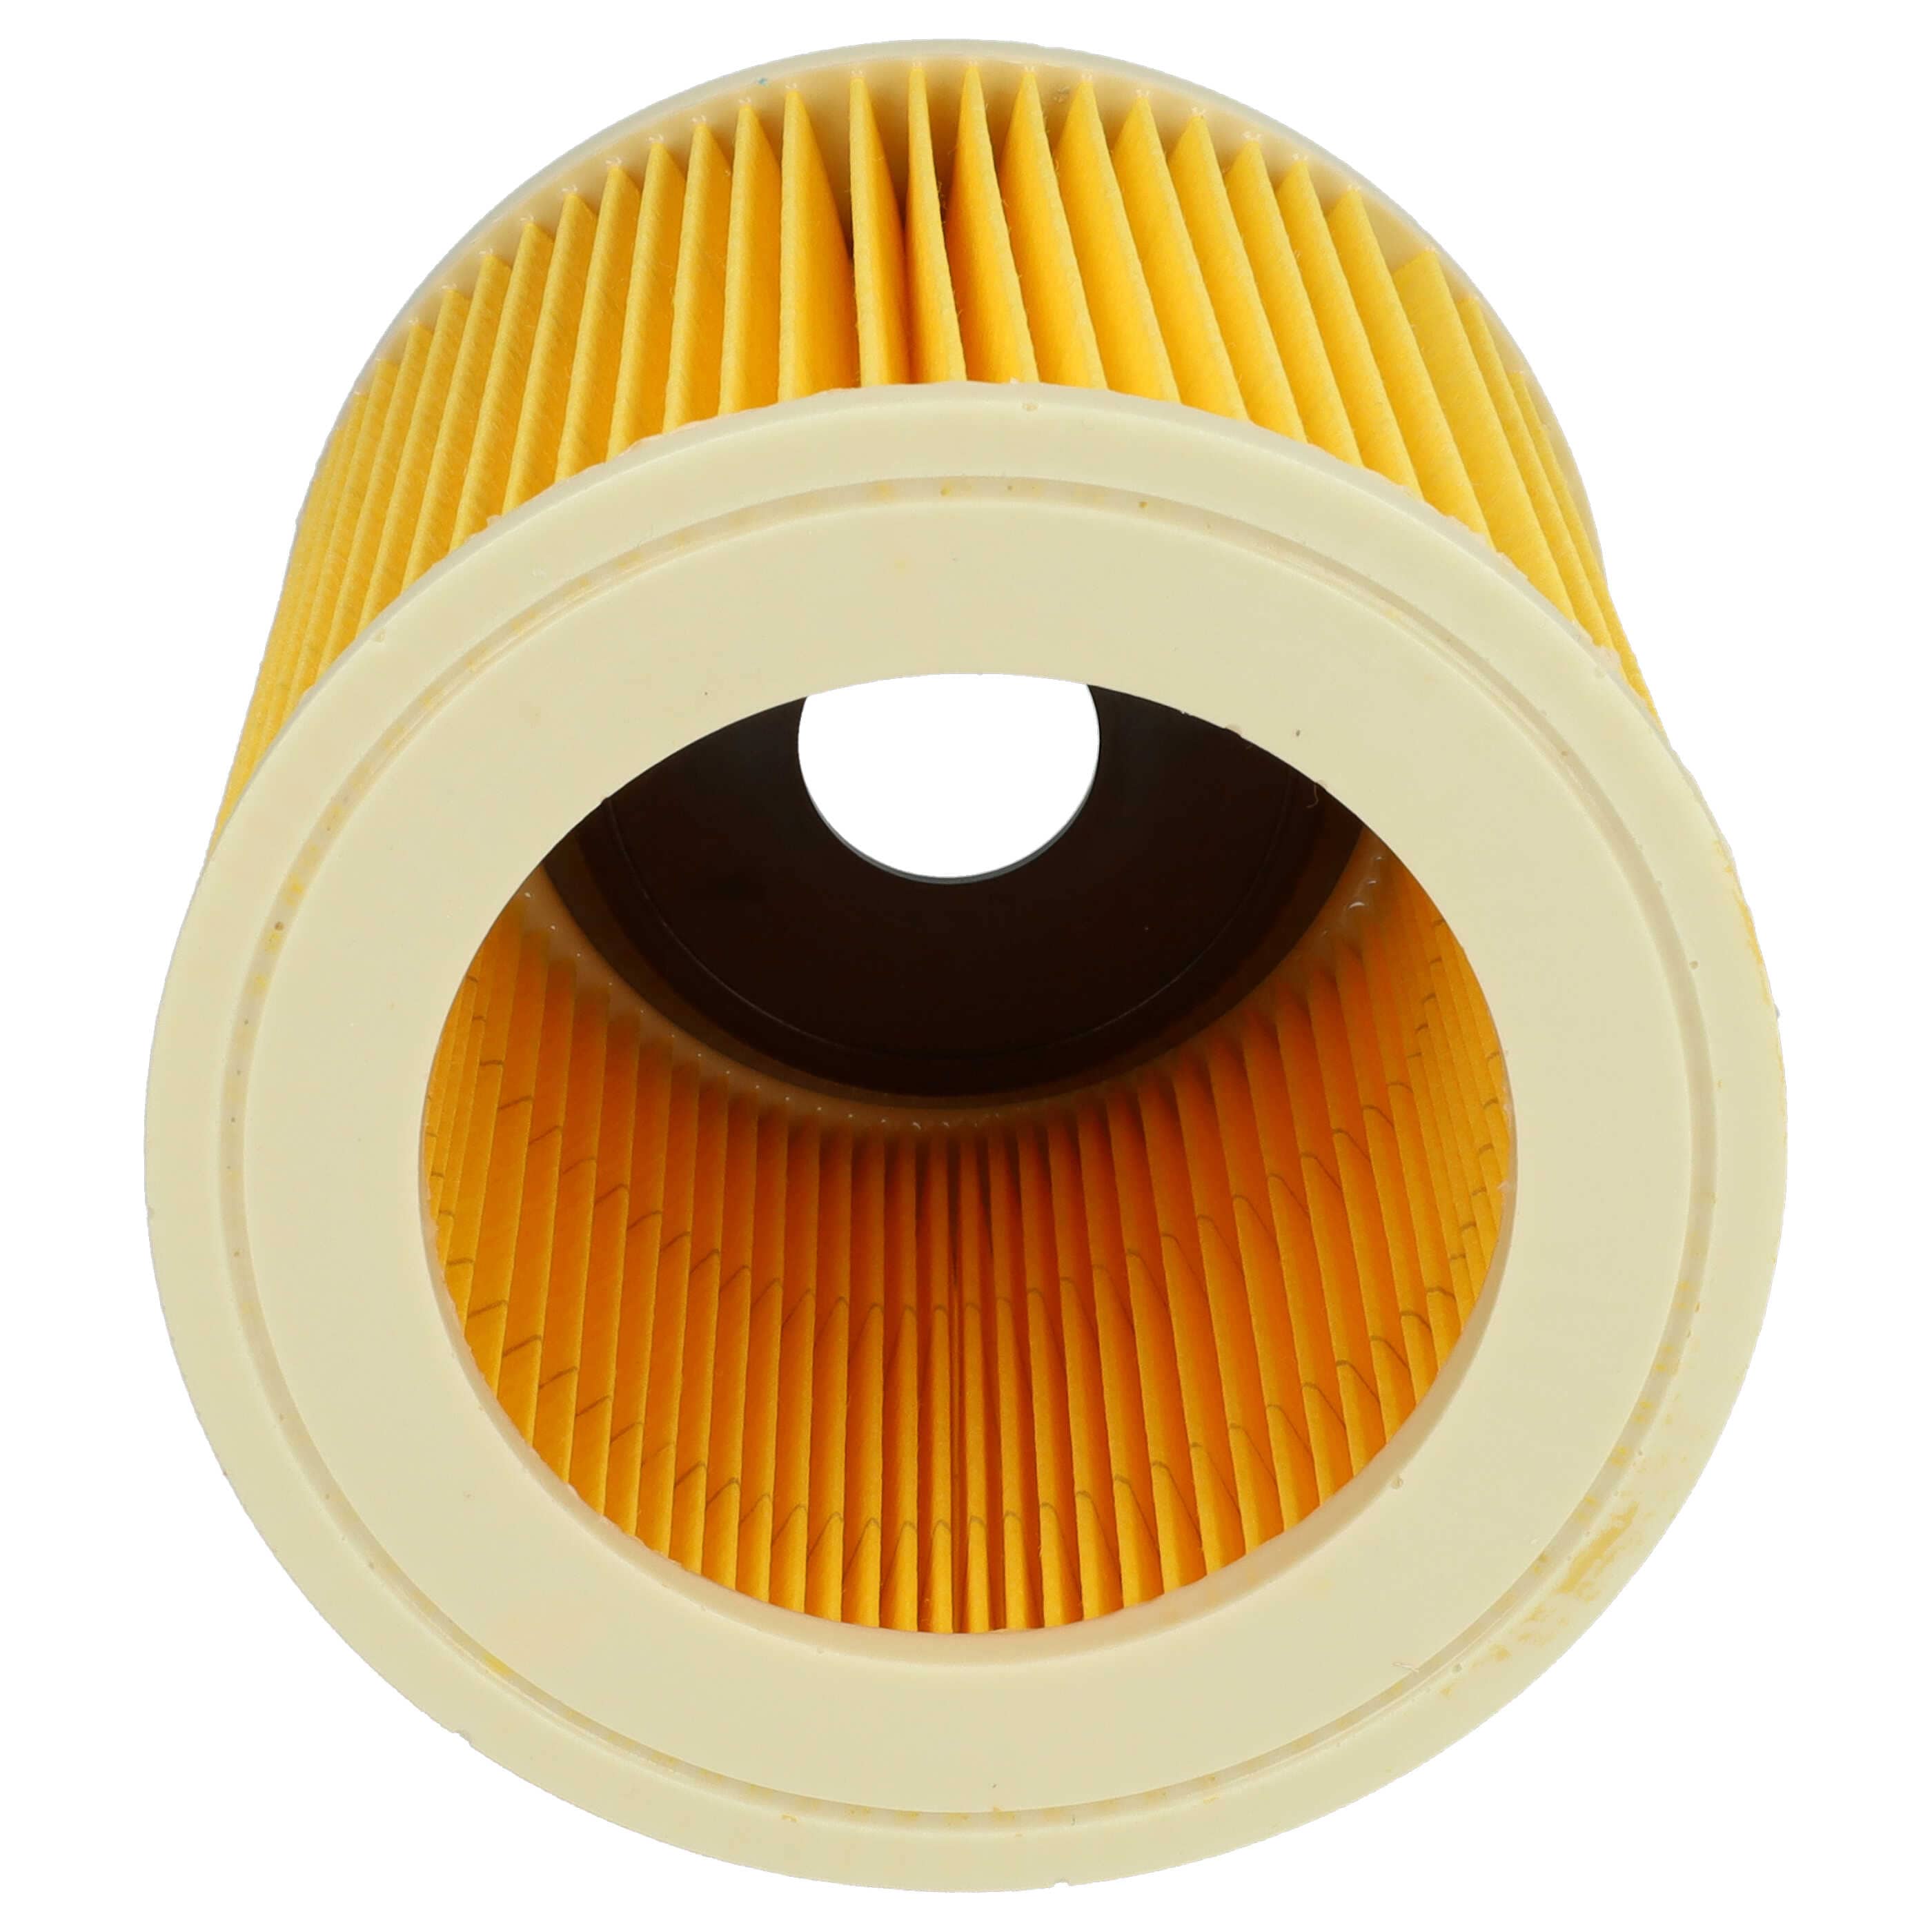 5x Filtro reemplaza Kärcher 2.863-303.0, 6.414-547.0 para aspiradora - filtro de cartucho, amarillo